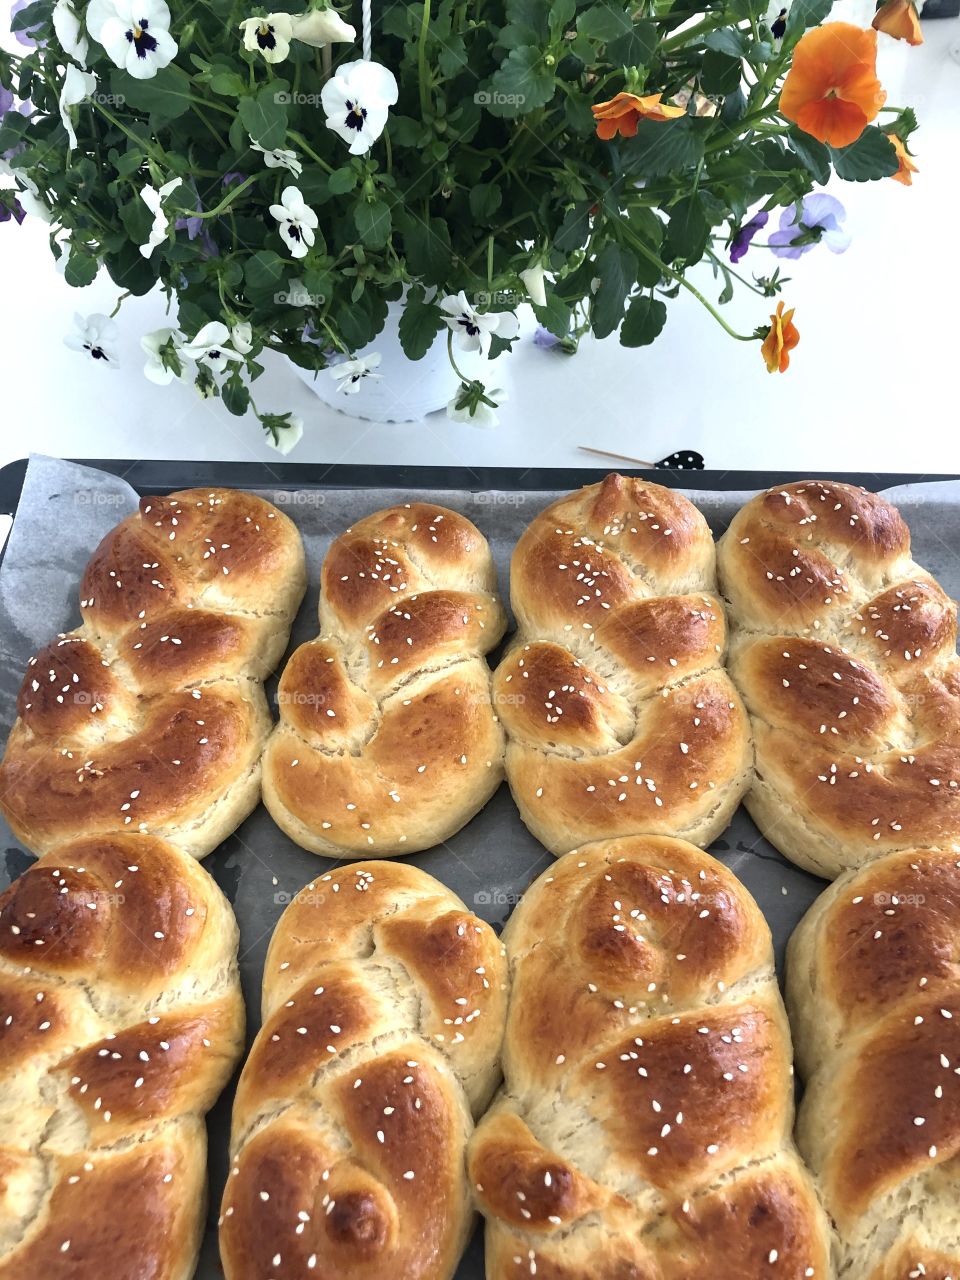 My bread ready for Shabbat dinner looking good 💕